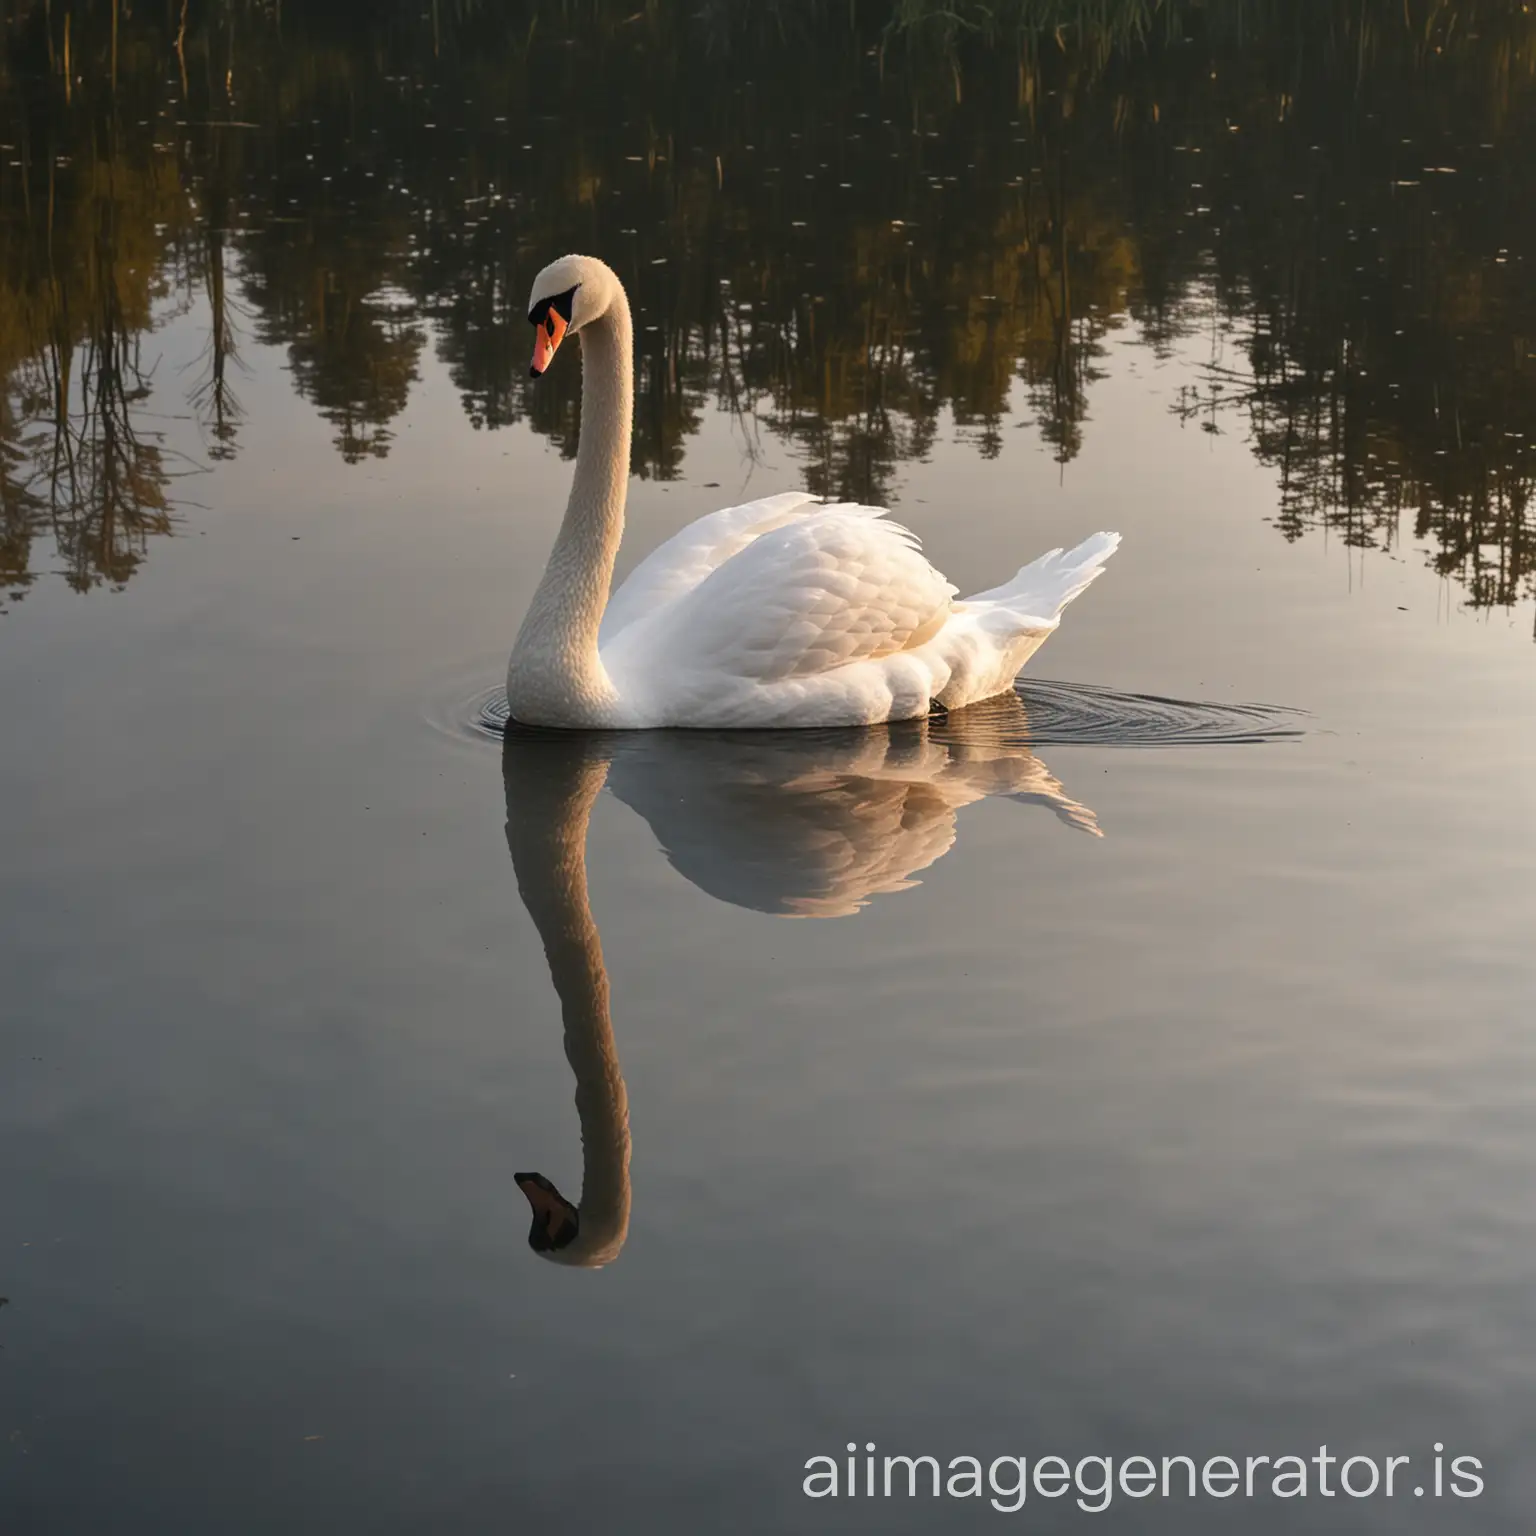 Graceful-Swan-Swimming-on-Tranquil-Morning-Lake